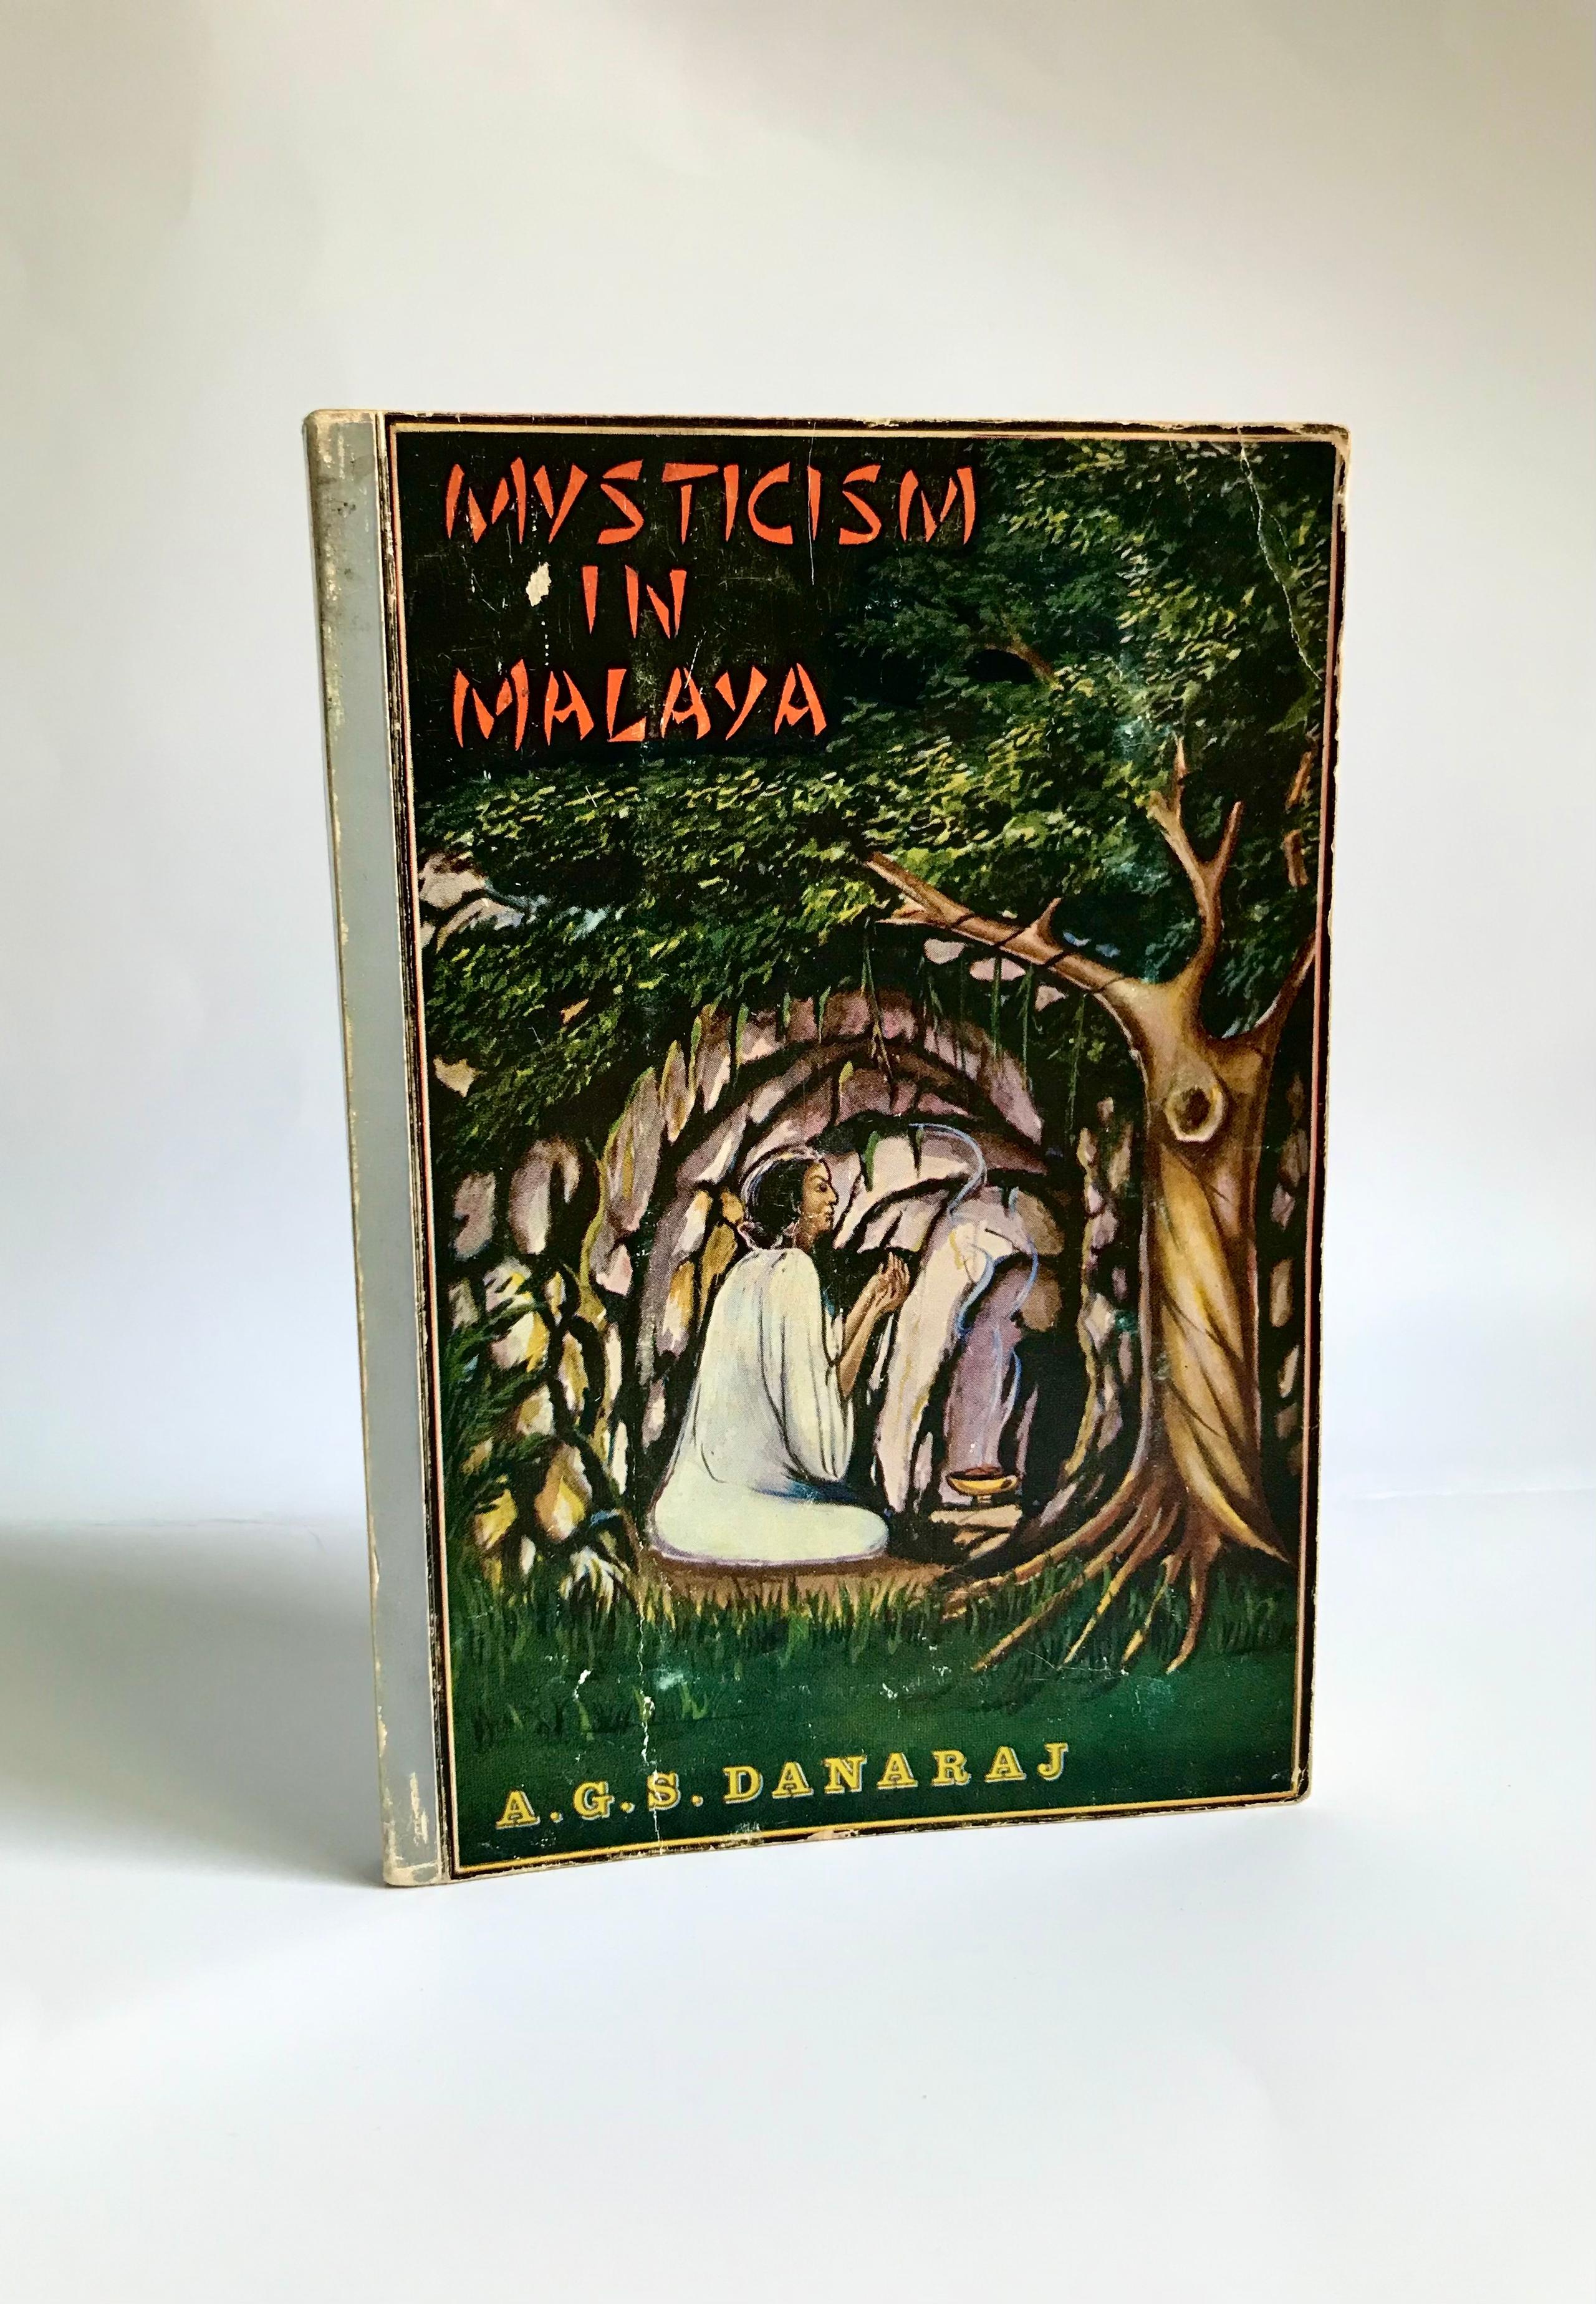 Mysticism In Malaya by A. G. S. Danaraj Signed